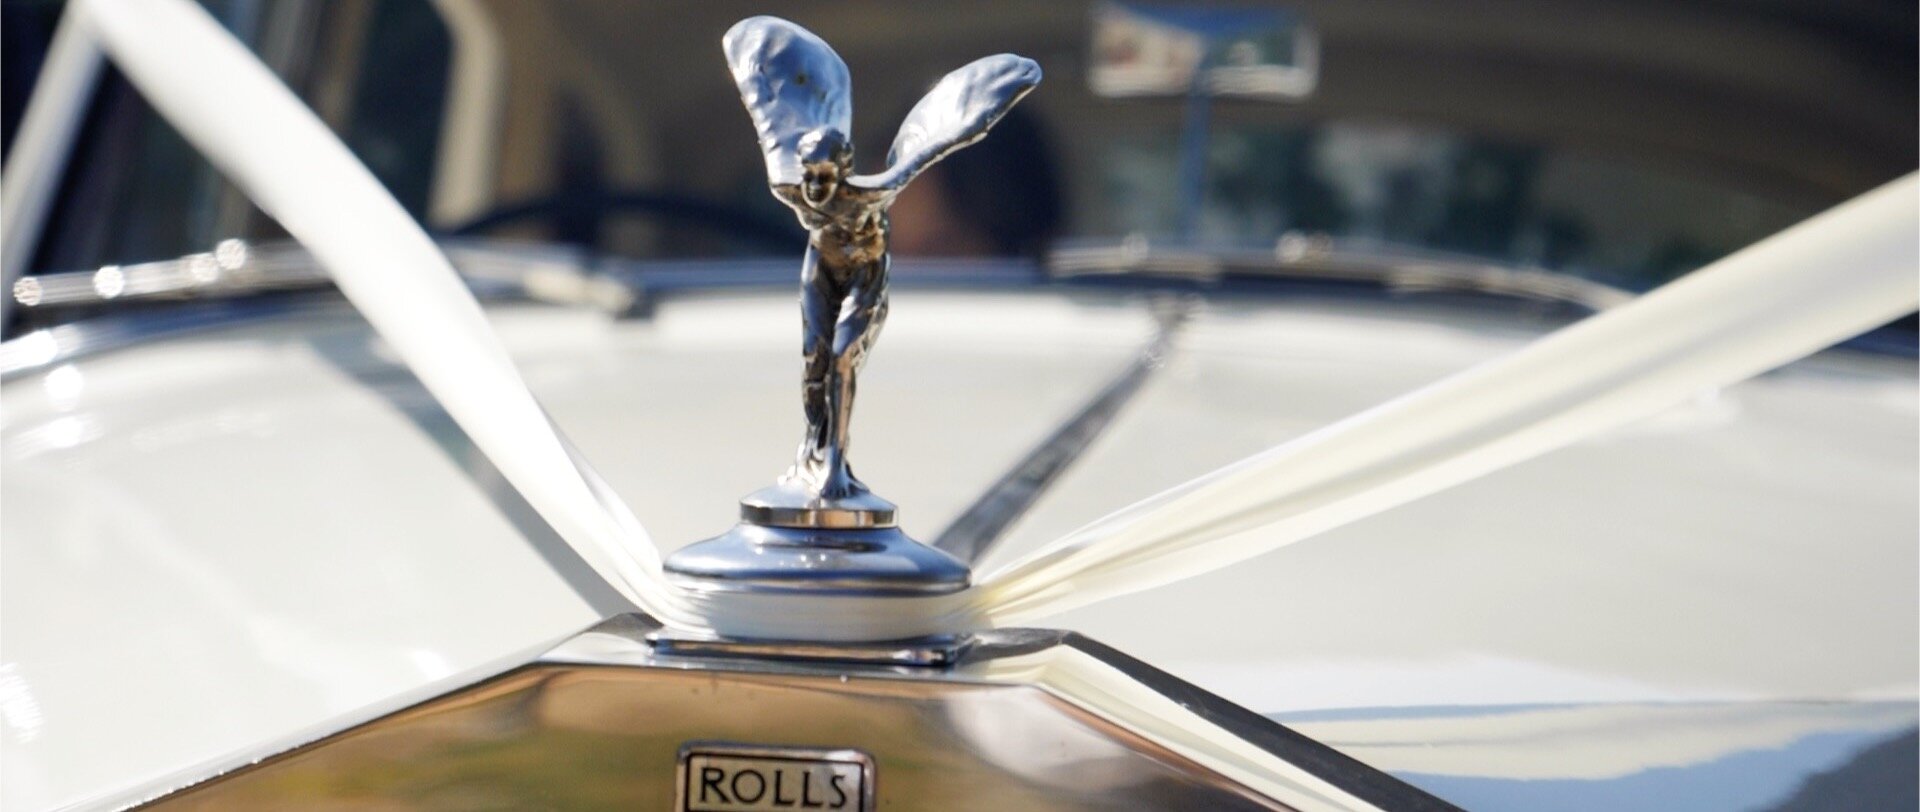 Essex wedding cars video Rolls Royce.jpg